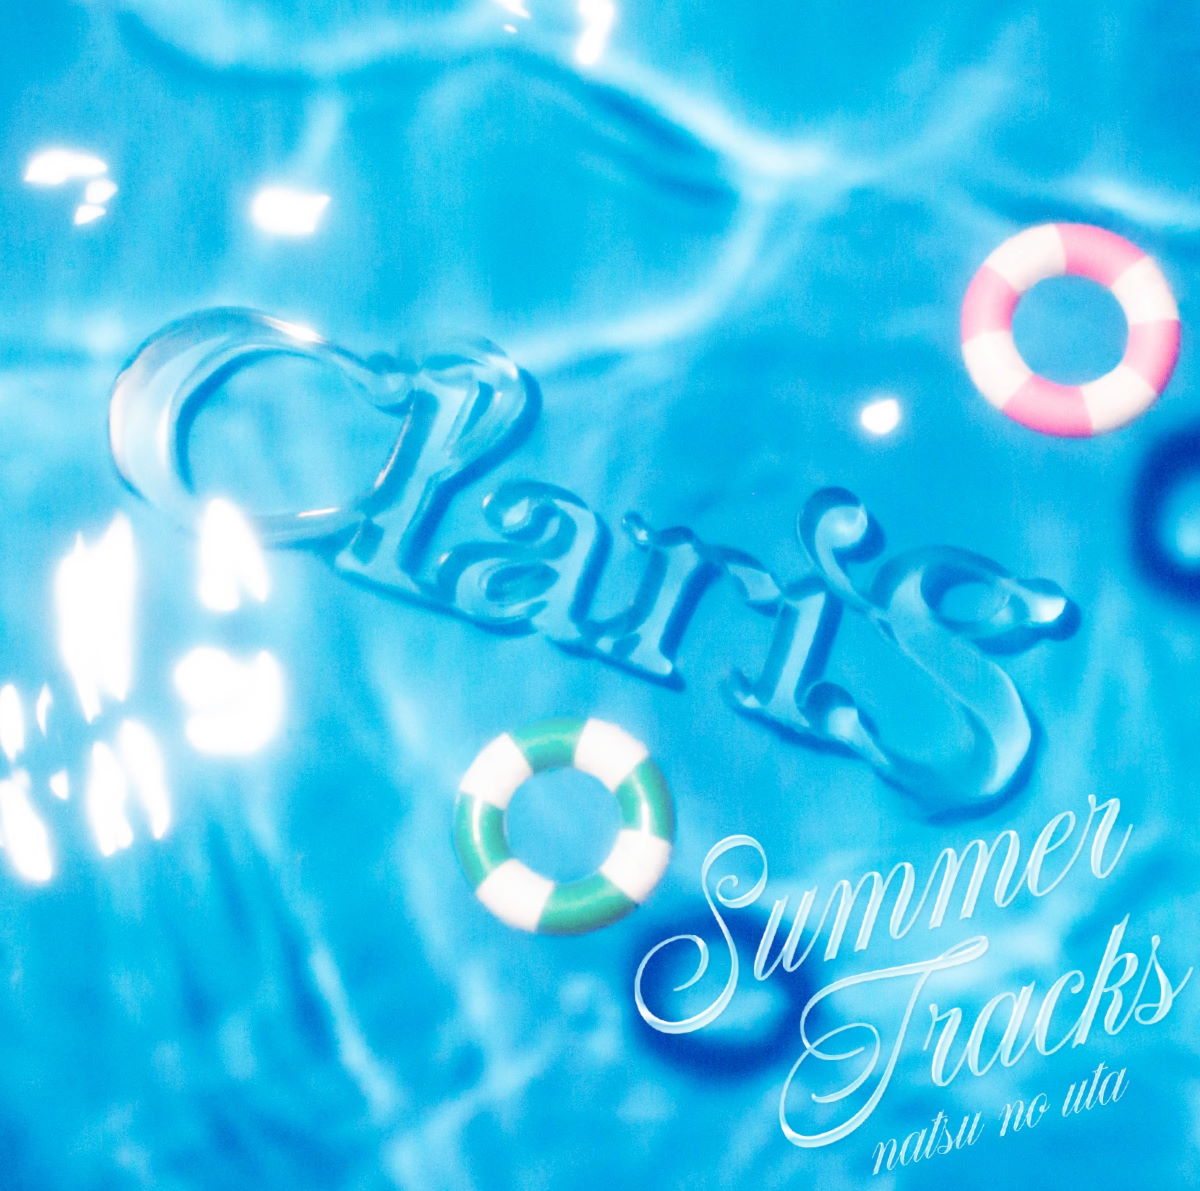 Cover for『ClariS - Koi no Vacance』from the release『SUMMER TRACKS -Natsu no Uta-』